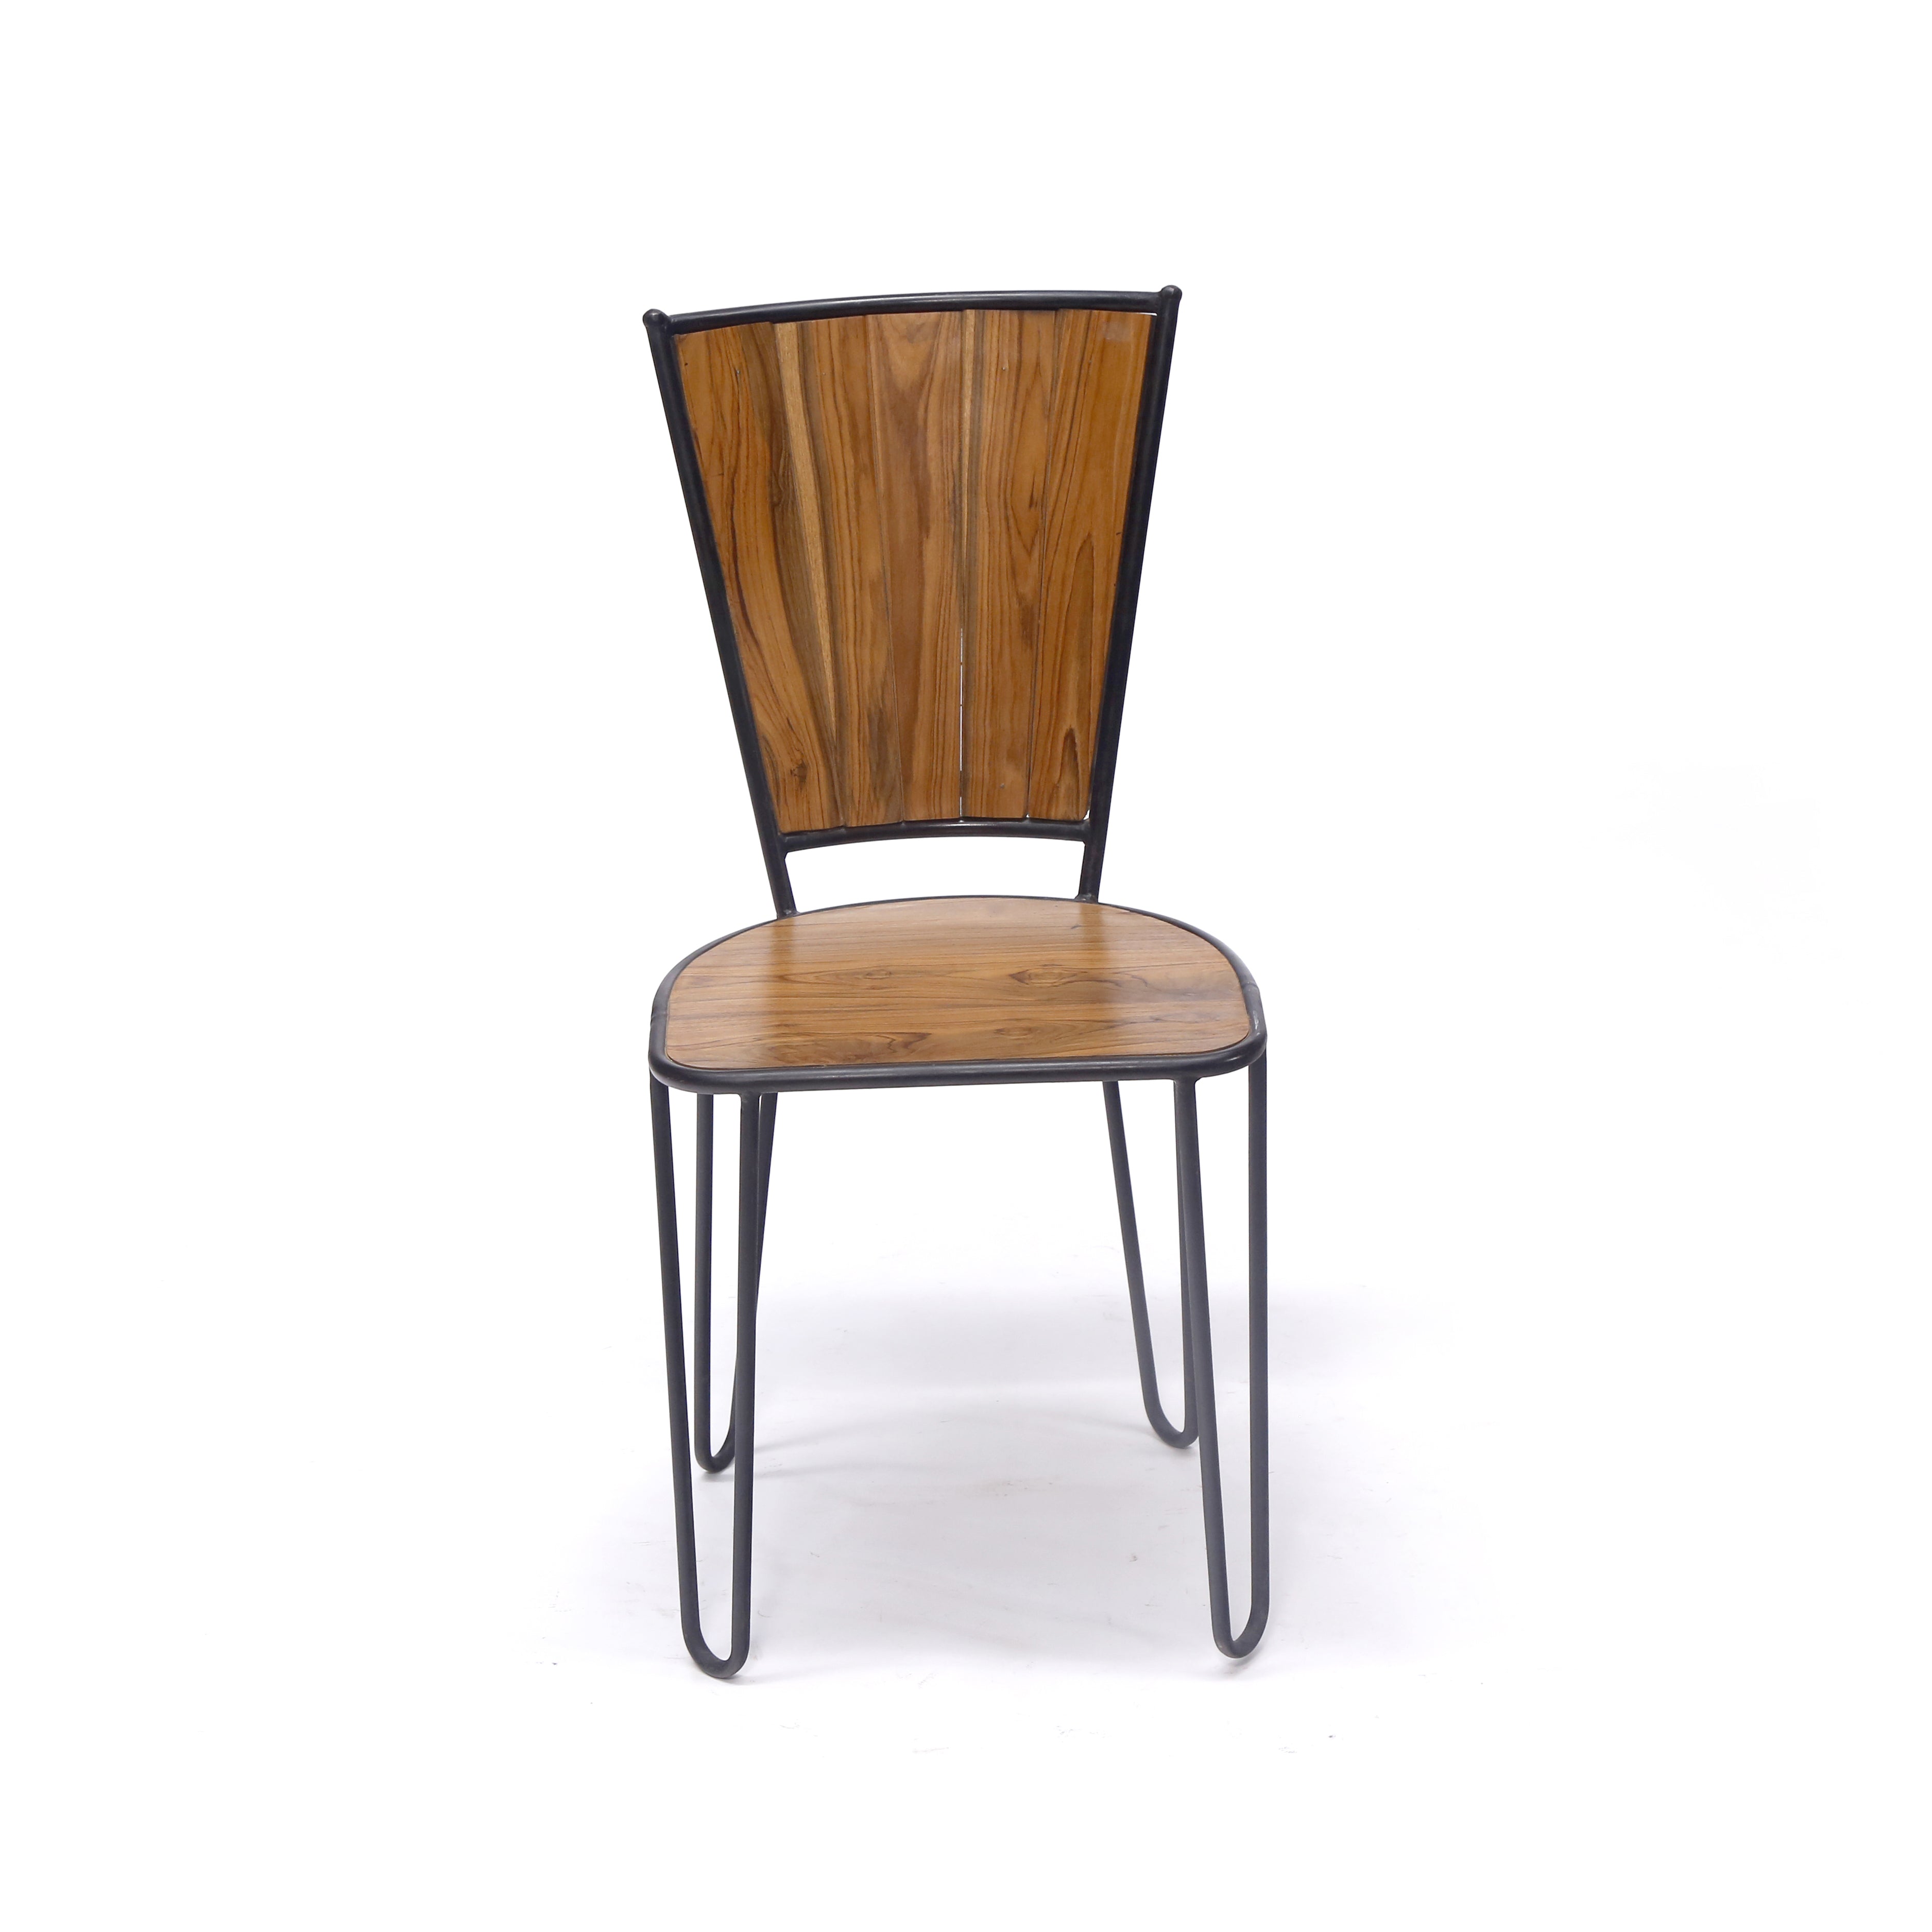 (Set of 2) Teak Wood Metallic Frame Chair Dining Chair